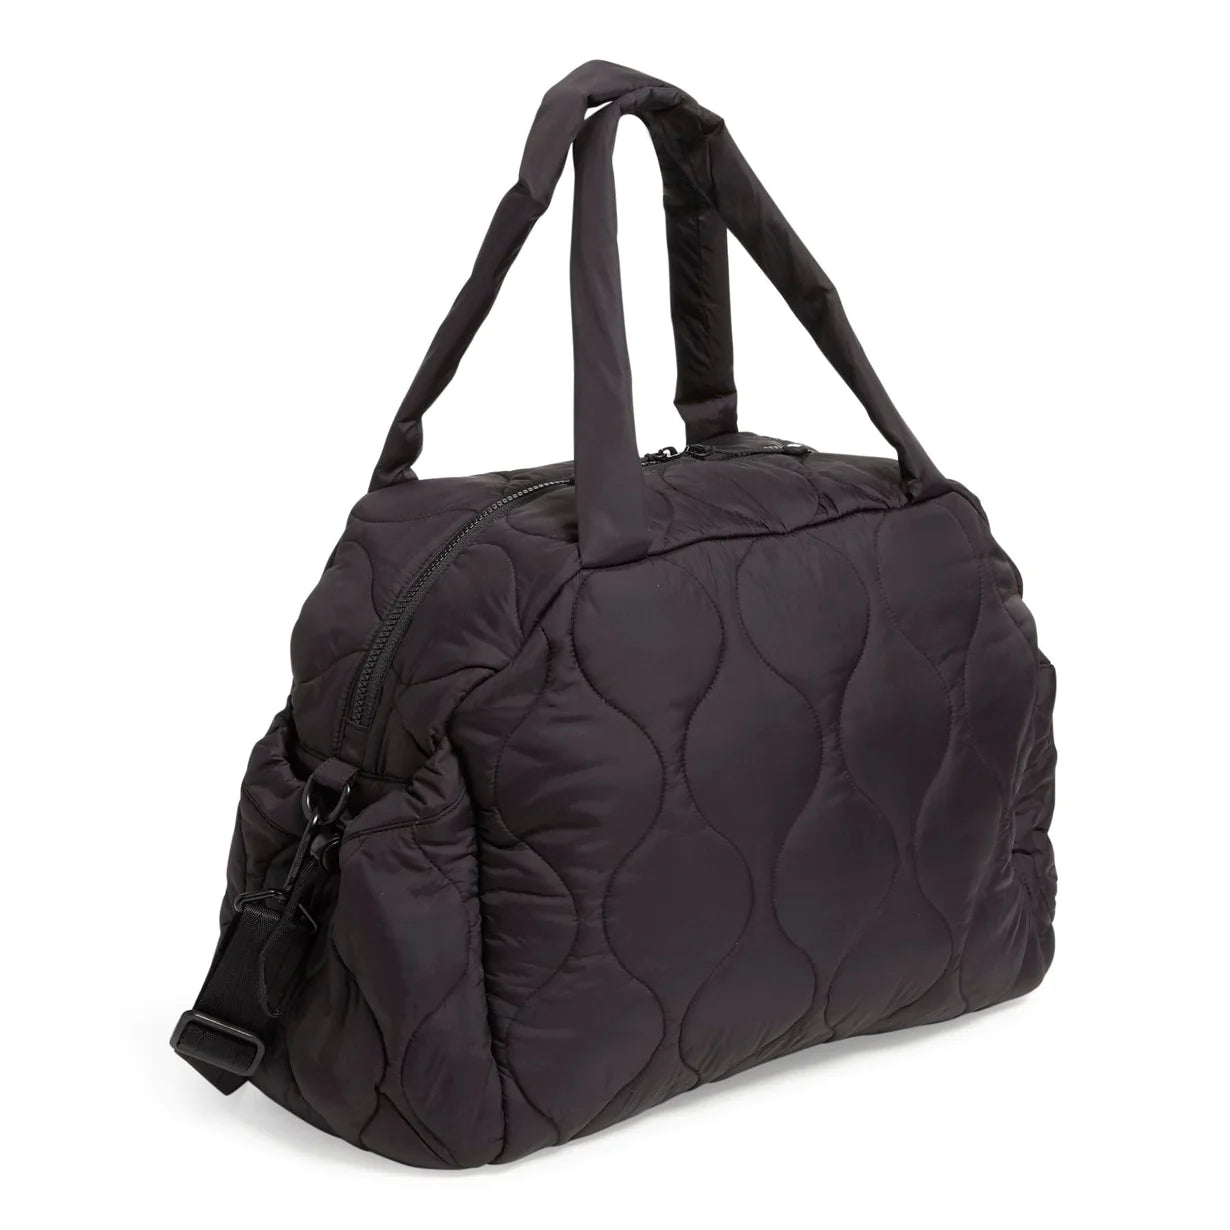 Vera Bradley Featherweight Travel Bag in Black